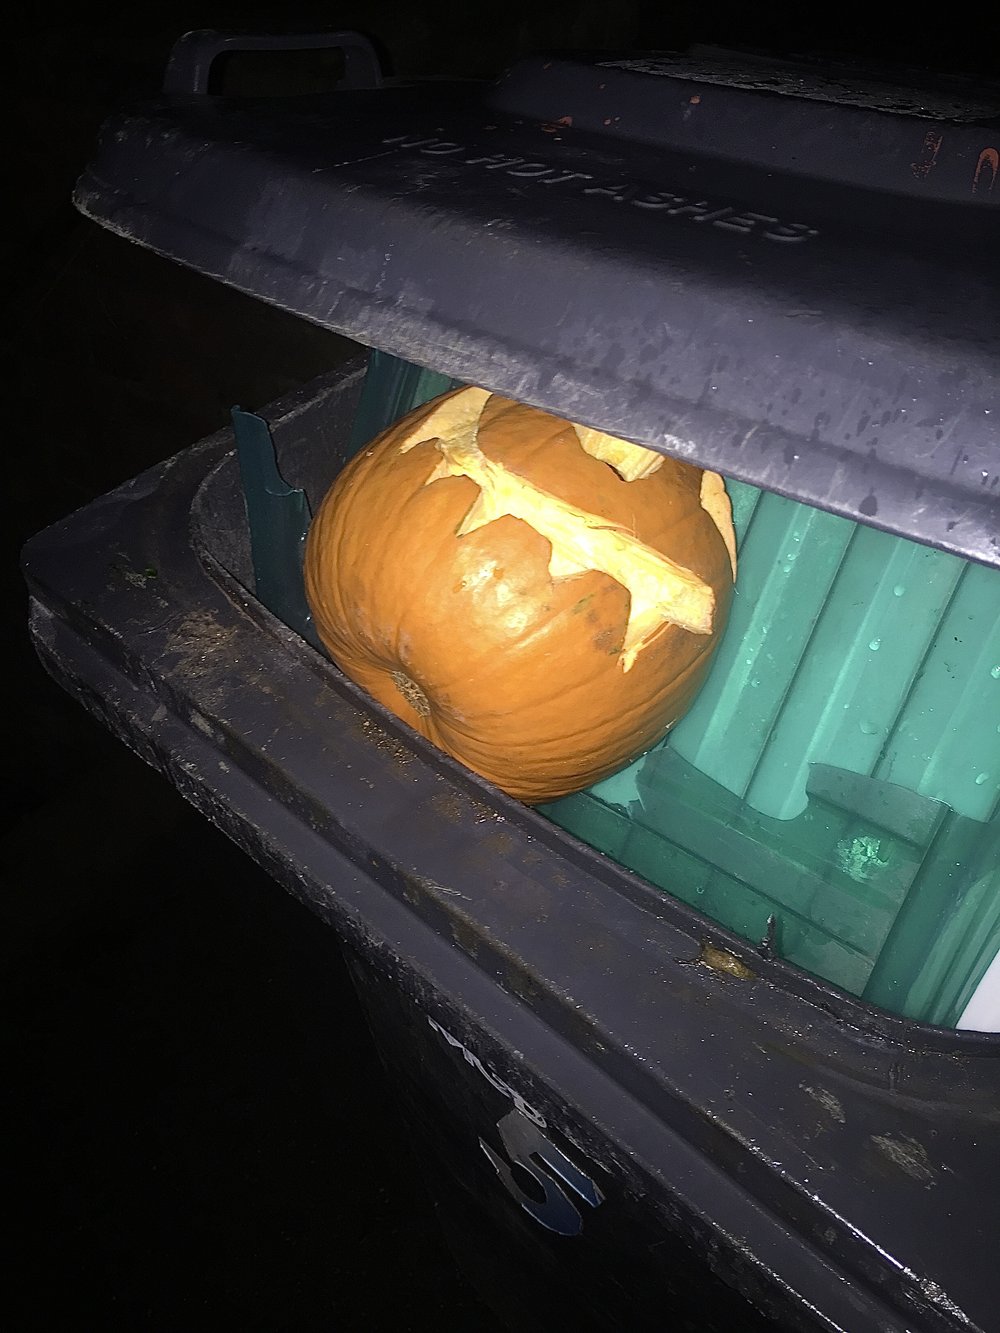  A carved pumpkin in a black wheelie bin, still smiling broadly. 